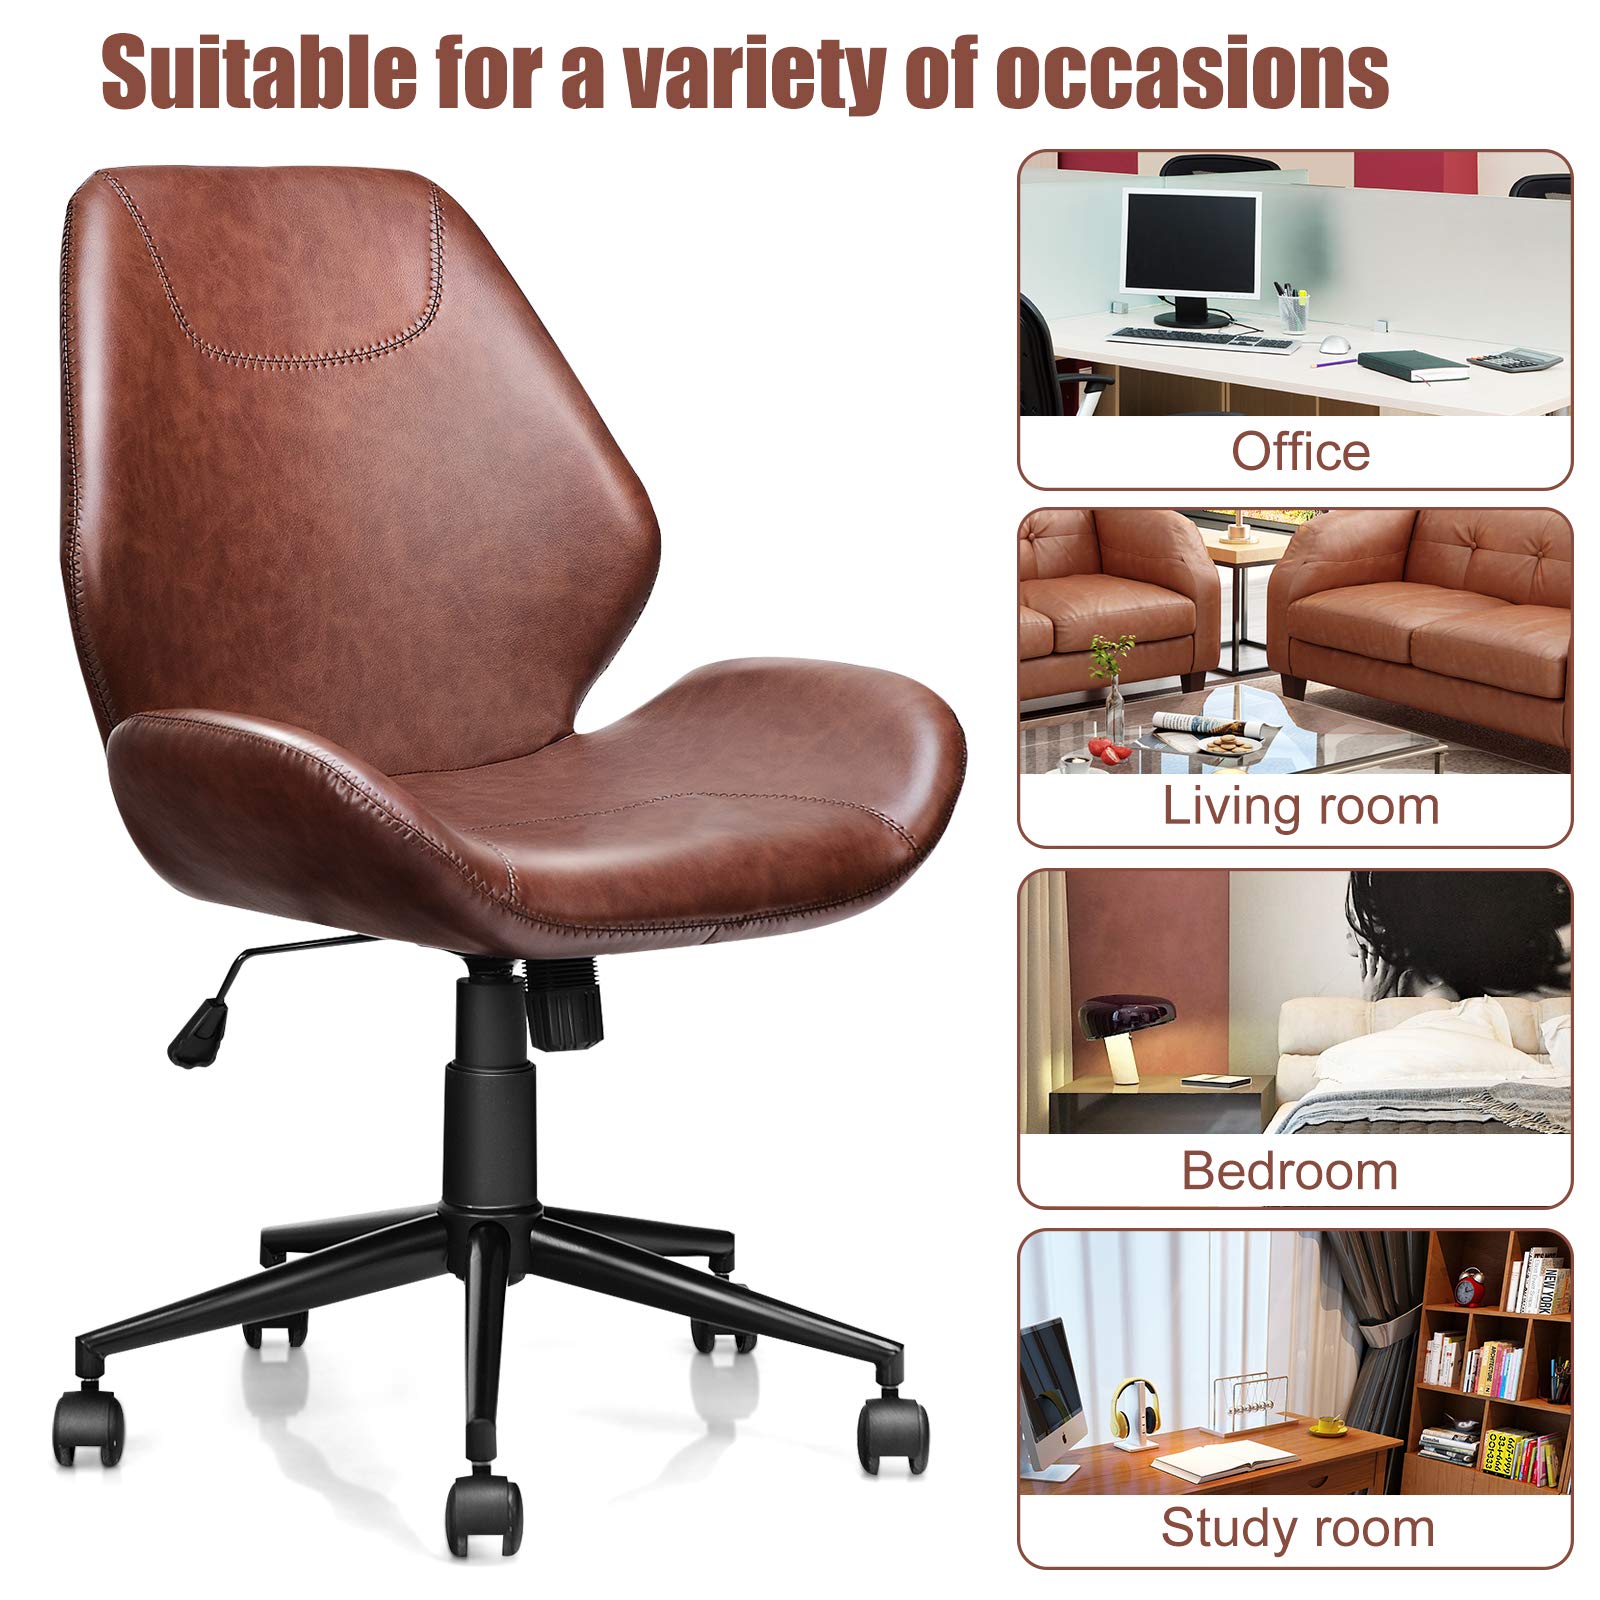 Giantex Home Office Leisure Chair